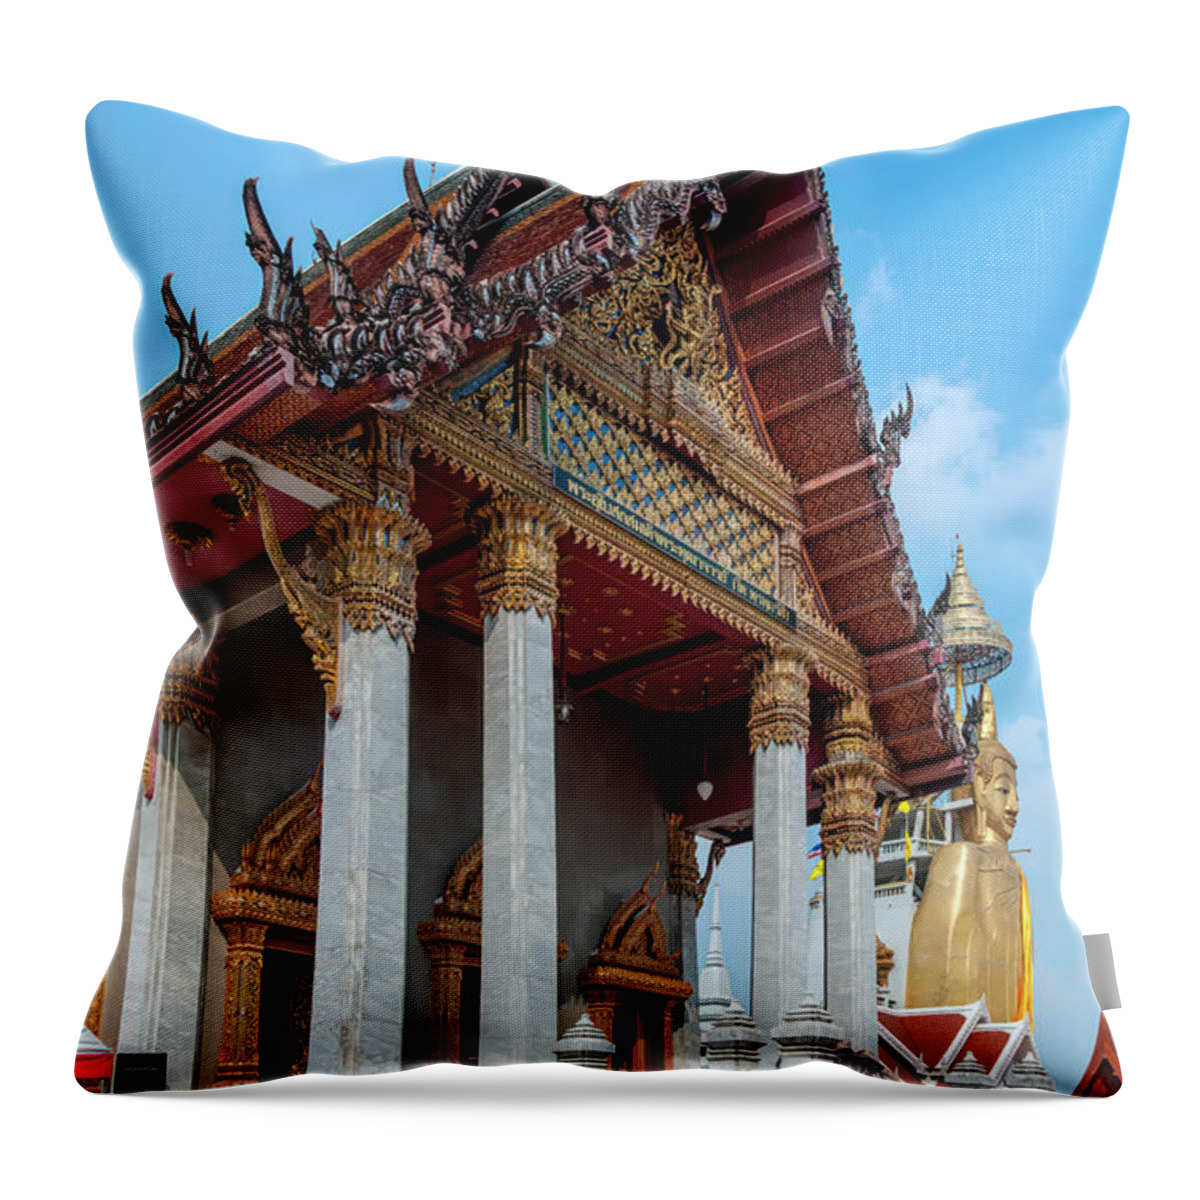 Scenic Throw Pillow featuring the photograph Wat Intarawihan Phra Ubosot DTHB1277 by Gerry Gantt